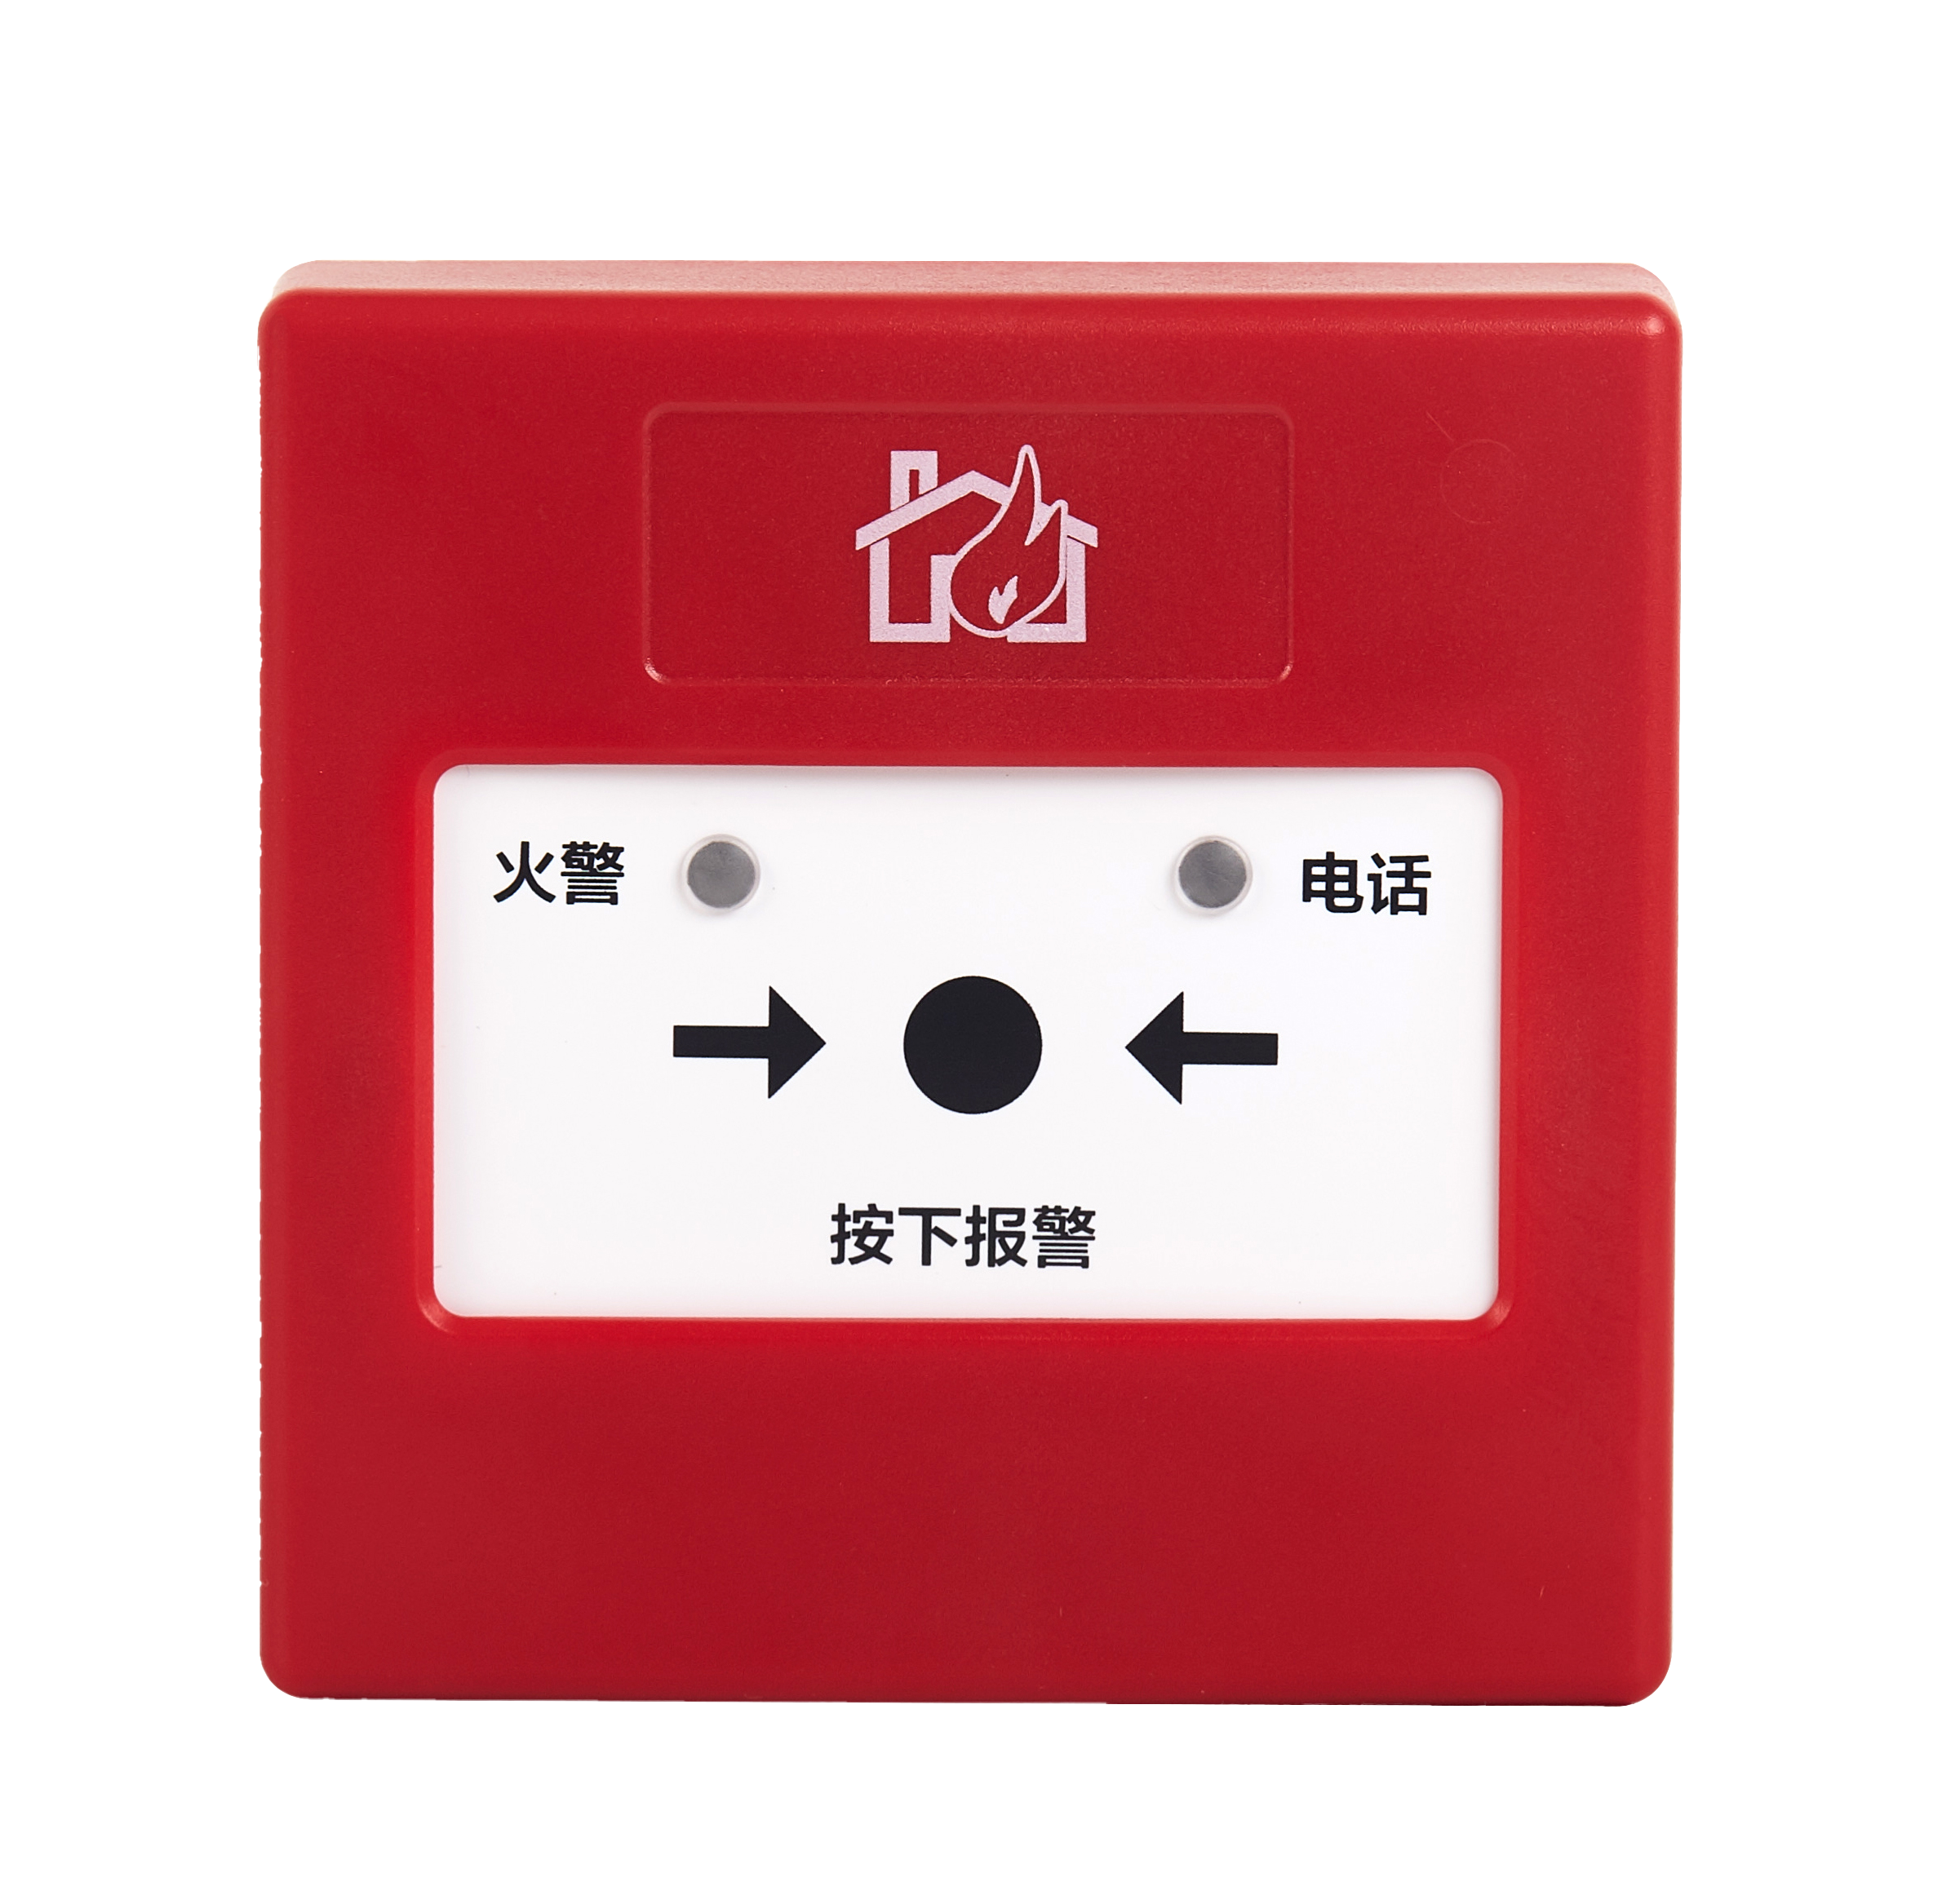 Manual fire alarm button